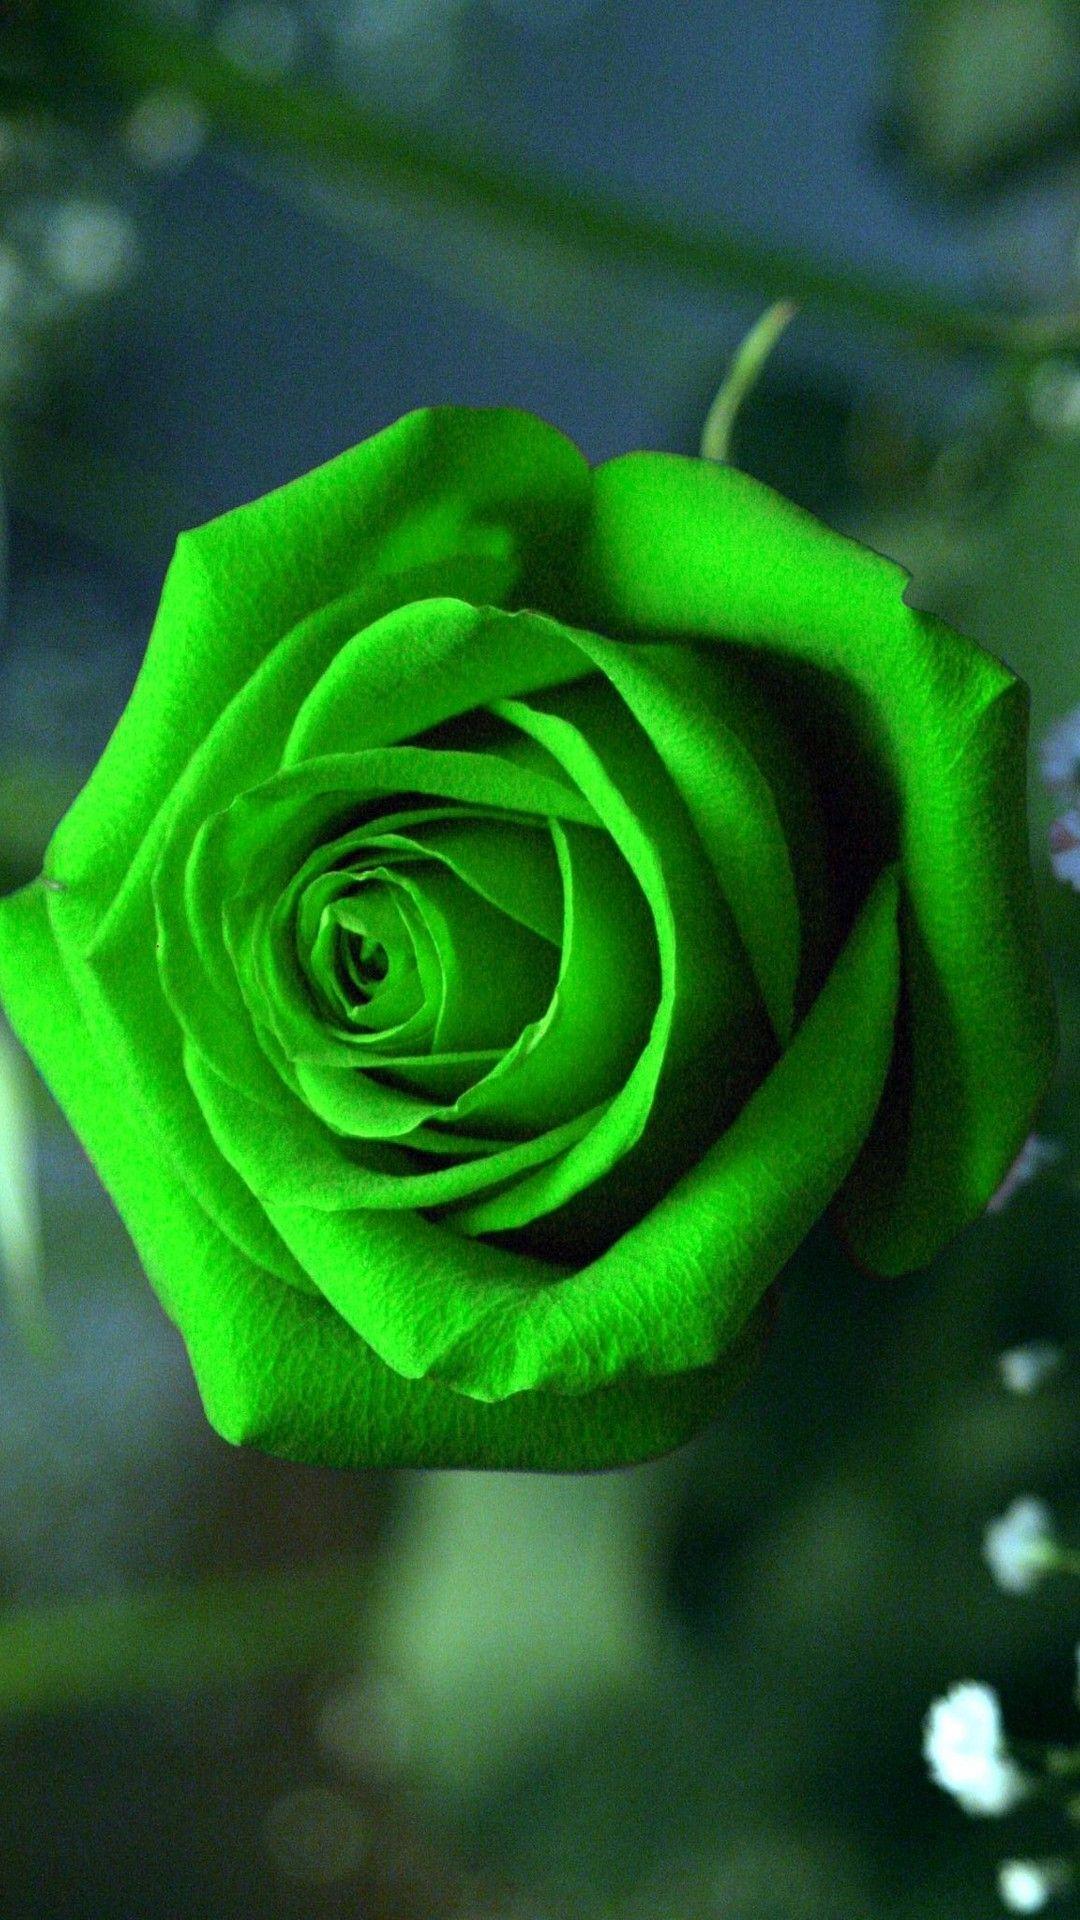 Green Rose Mobile Wallpaper. Best HD Wallpaper. WALLPAPERS. Rose